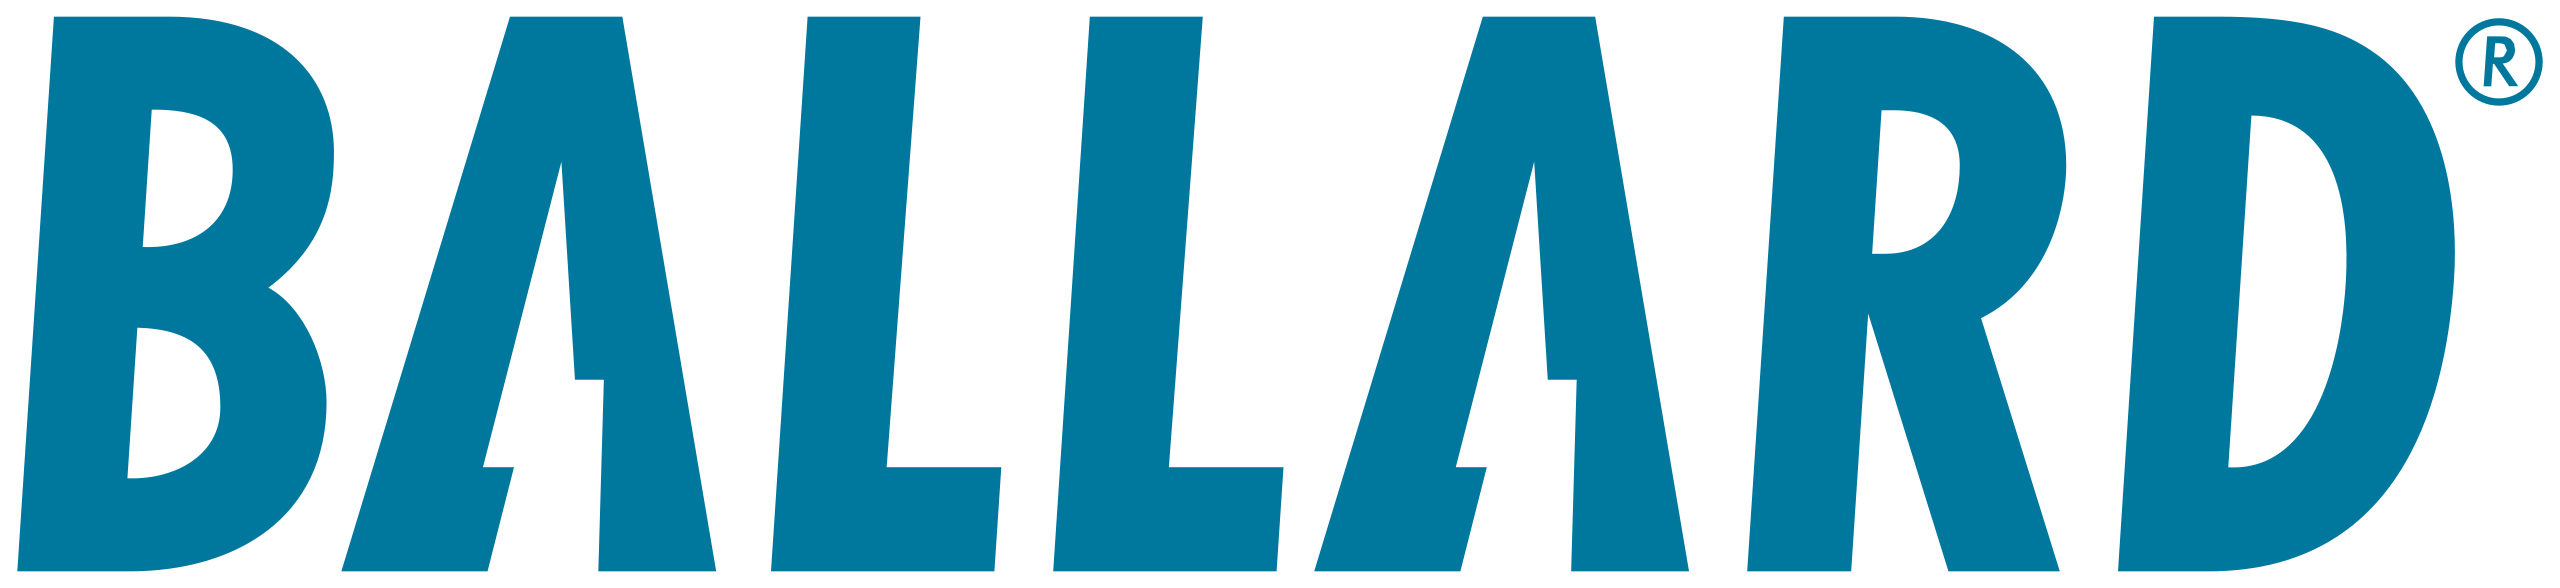 Ballard Power Systems logo